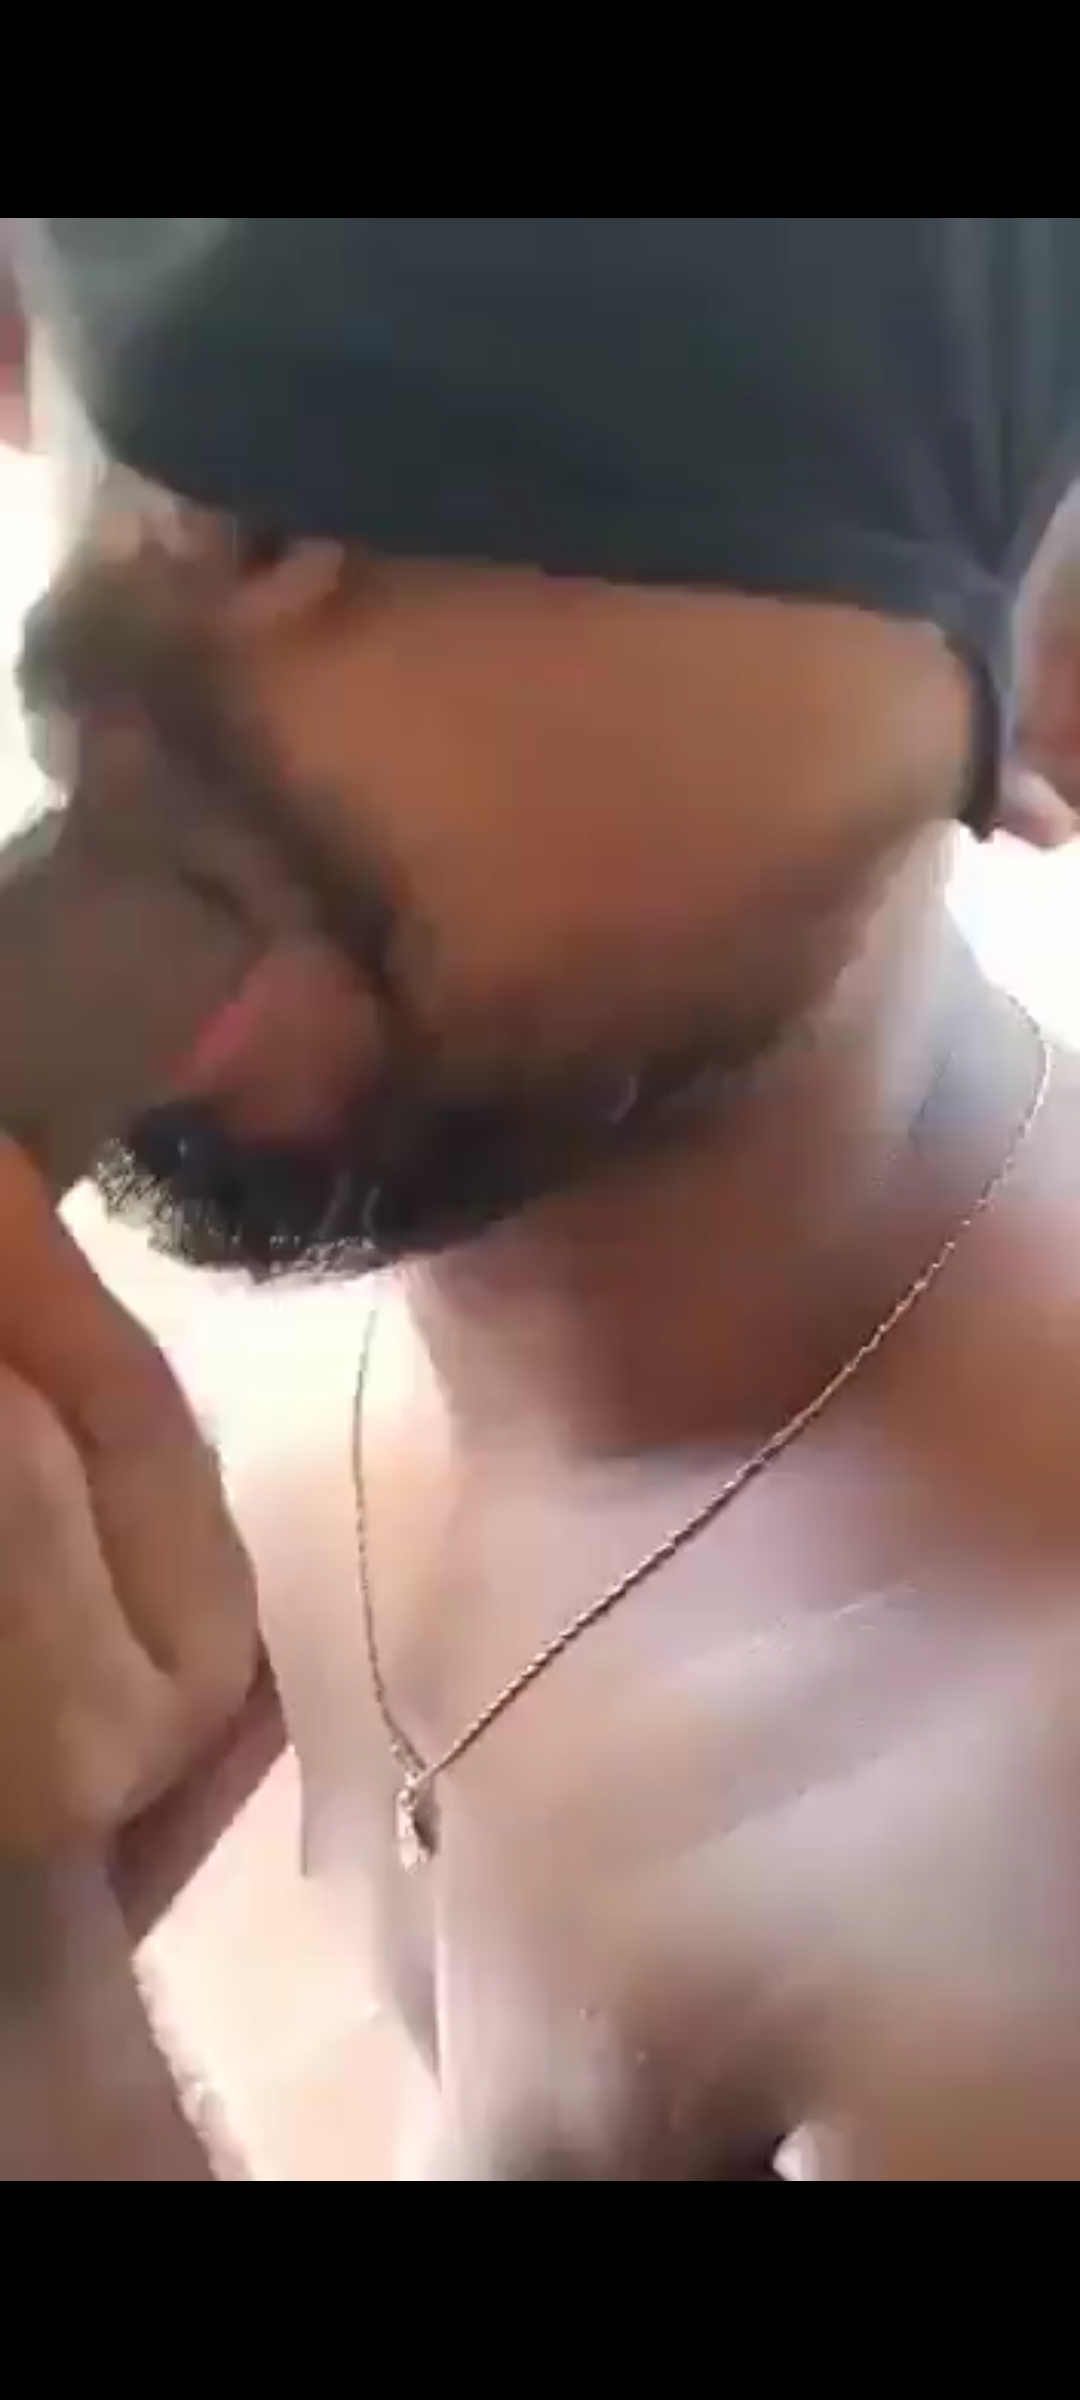 Tamil gay blowjob his friend in public bathroom image